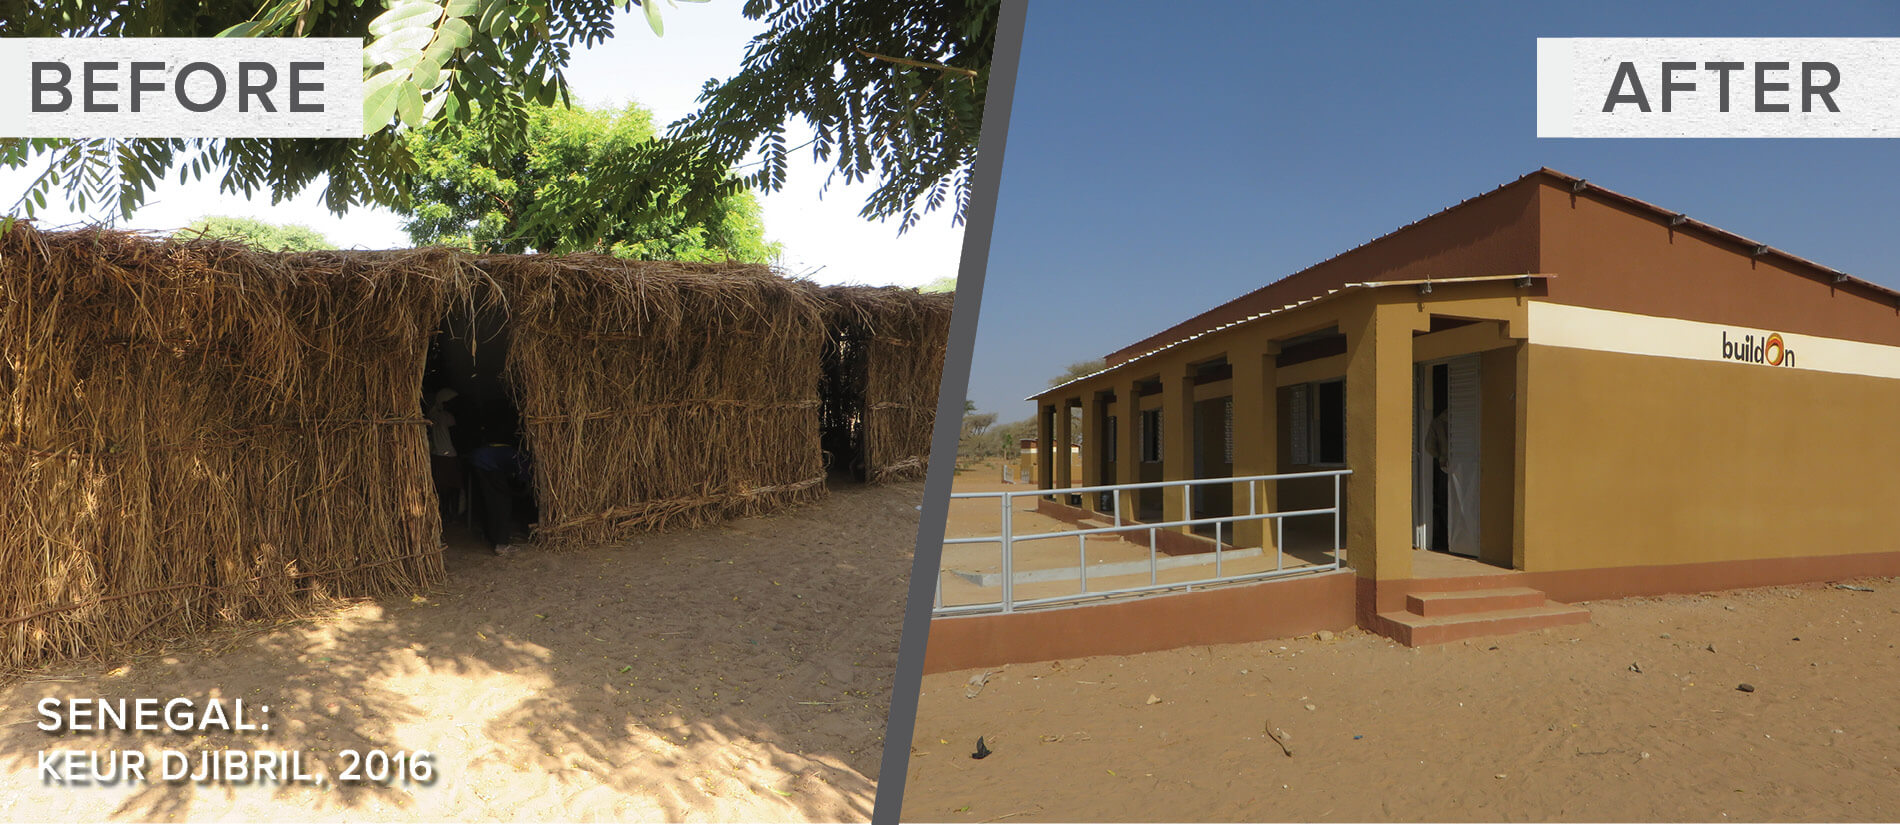 buildOn - Keur Djirbil, Senegal - Before and After_1900x825 - Dual Concept - 2021 (1)